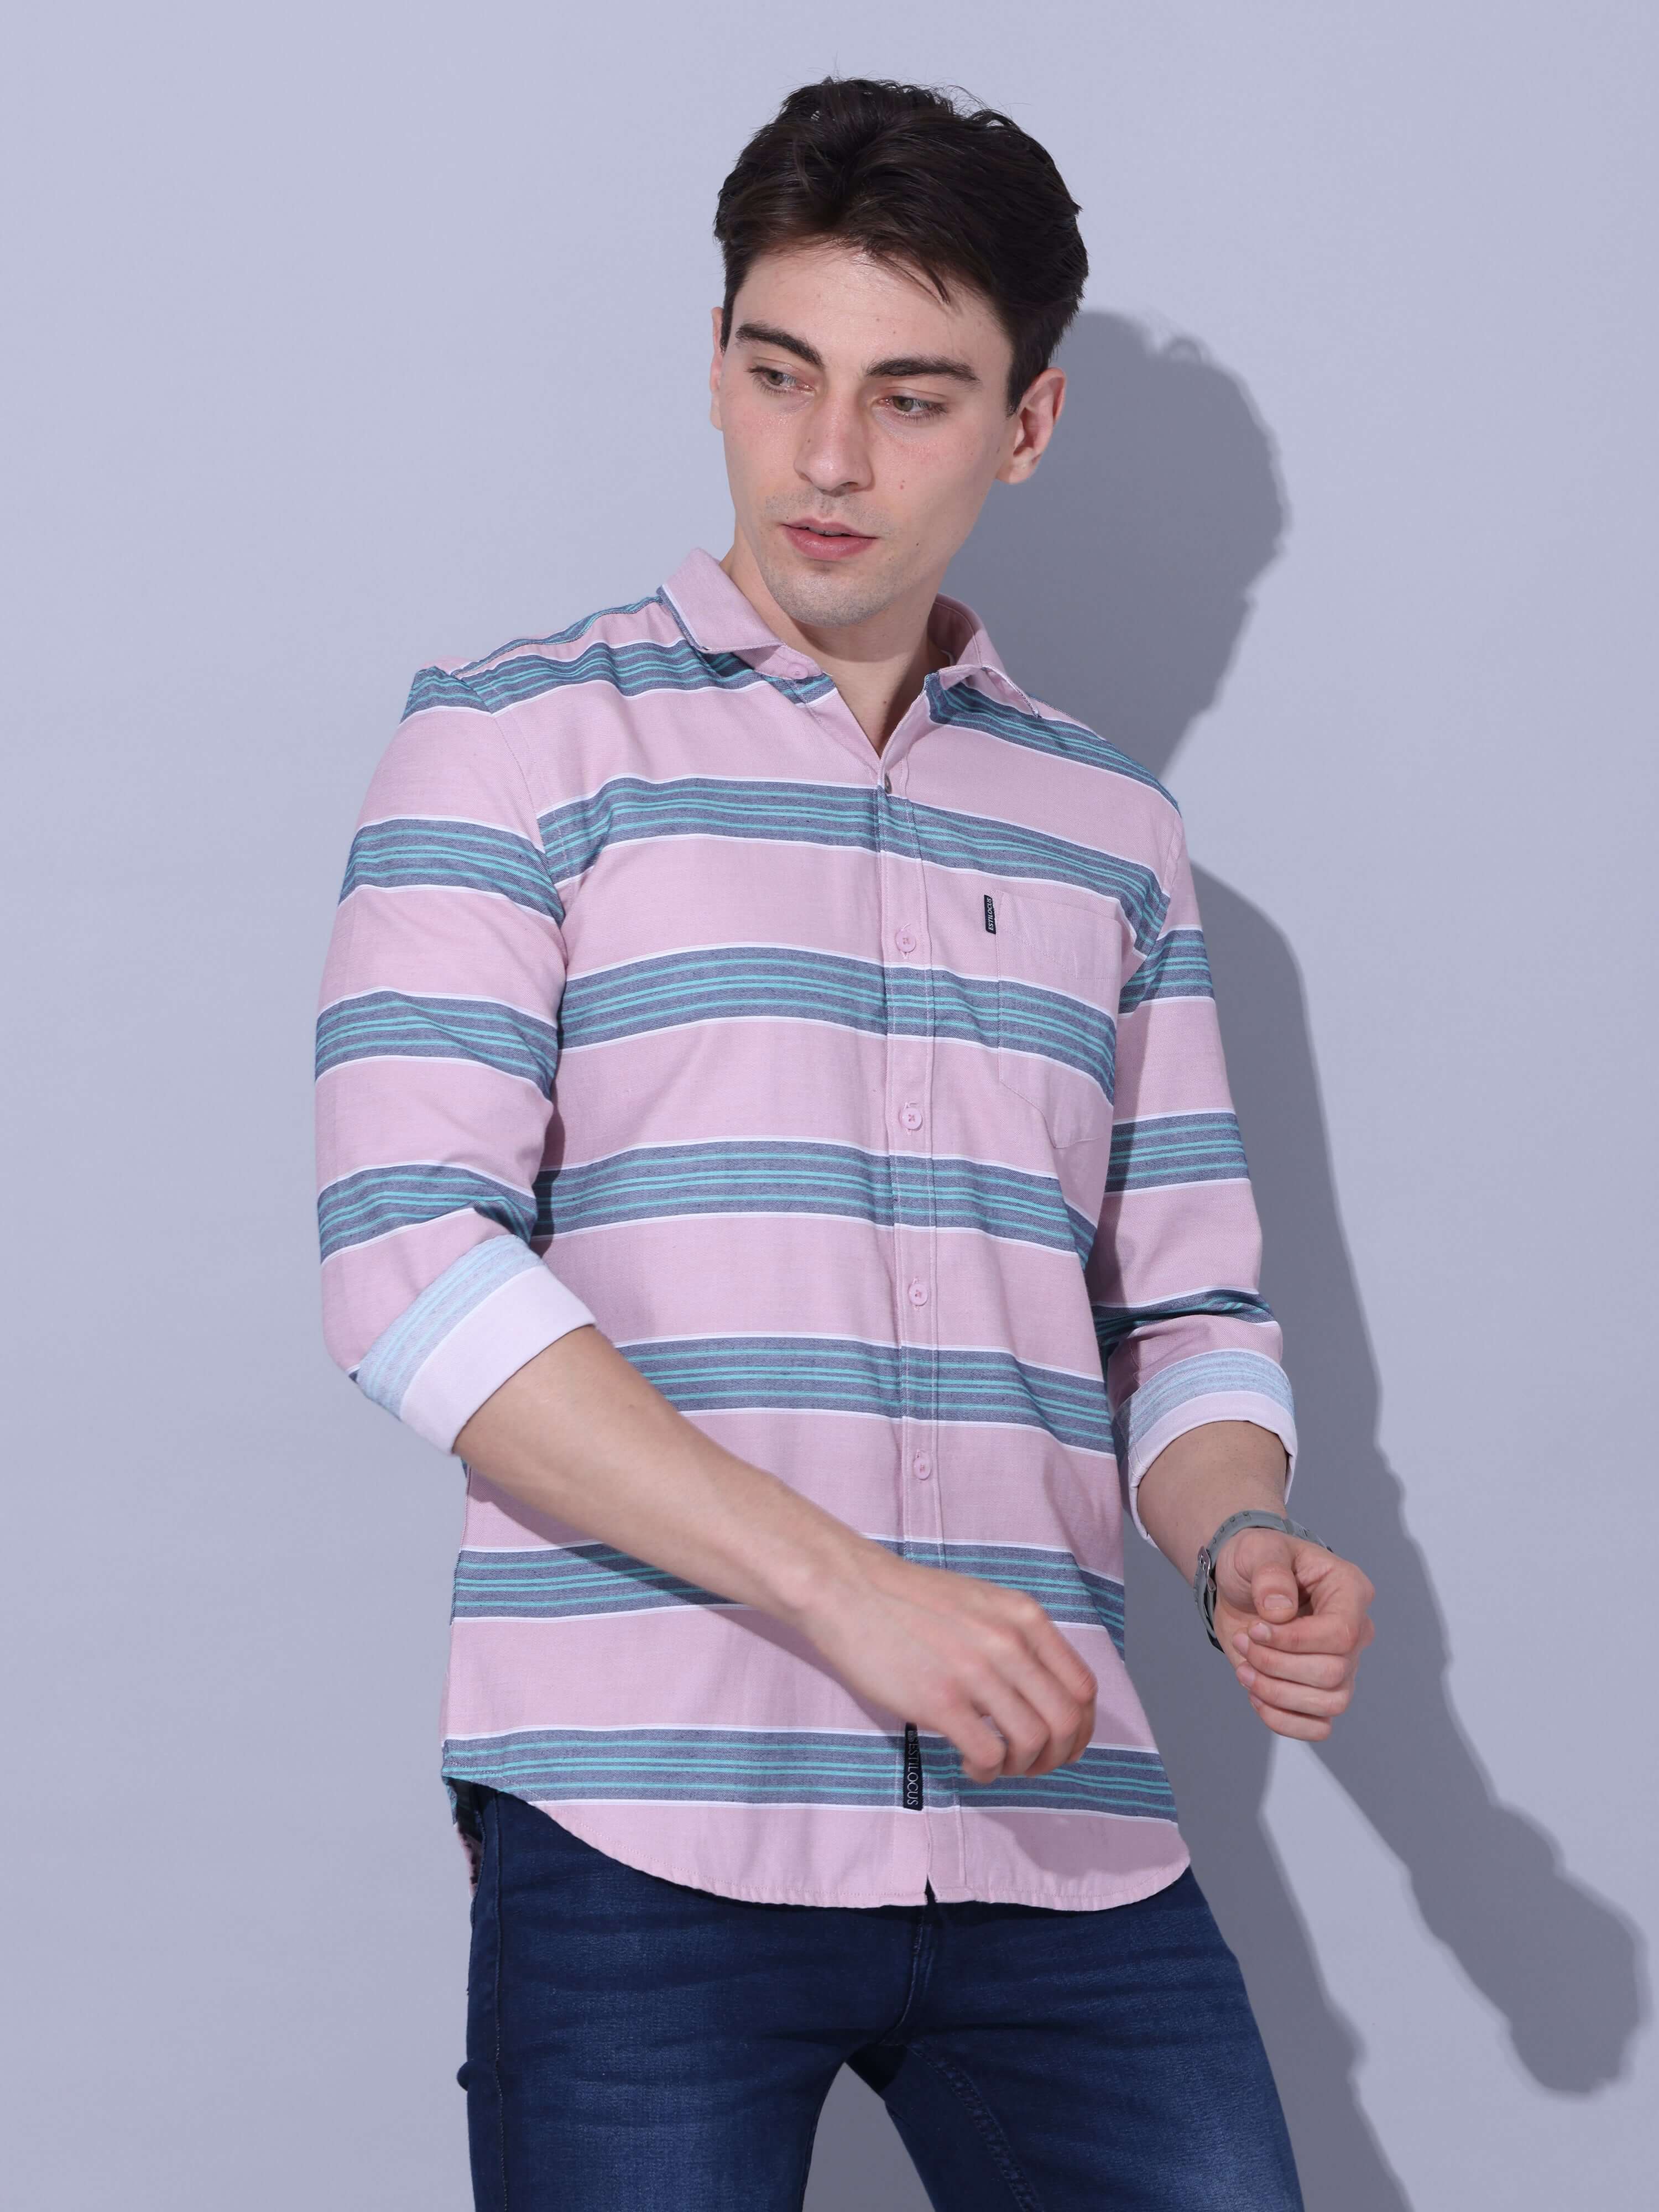 Stripes Casual
Shirt